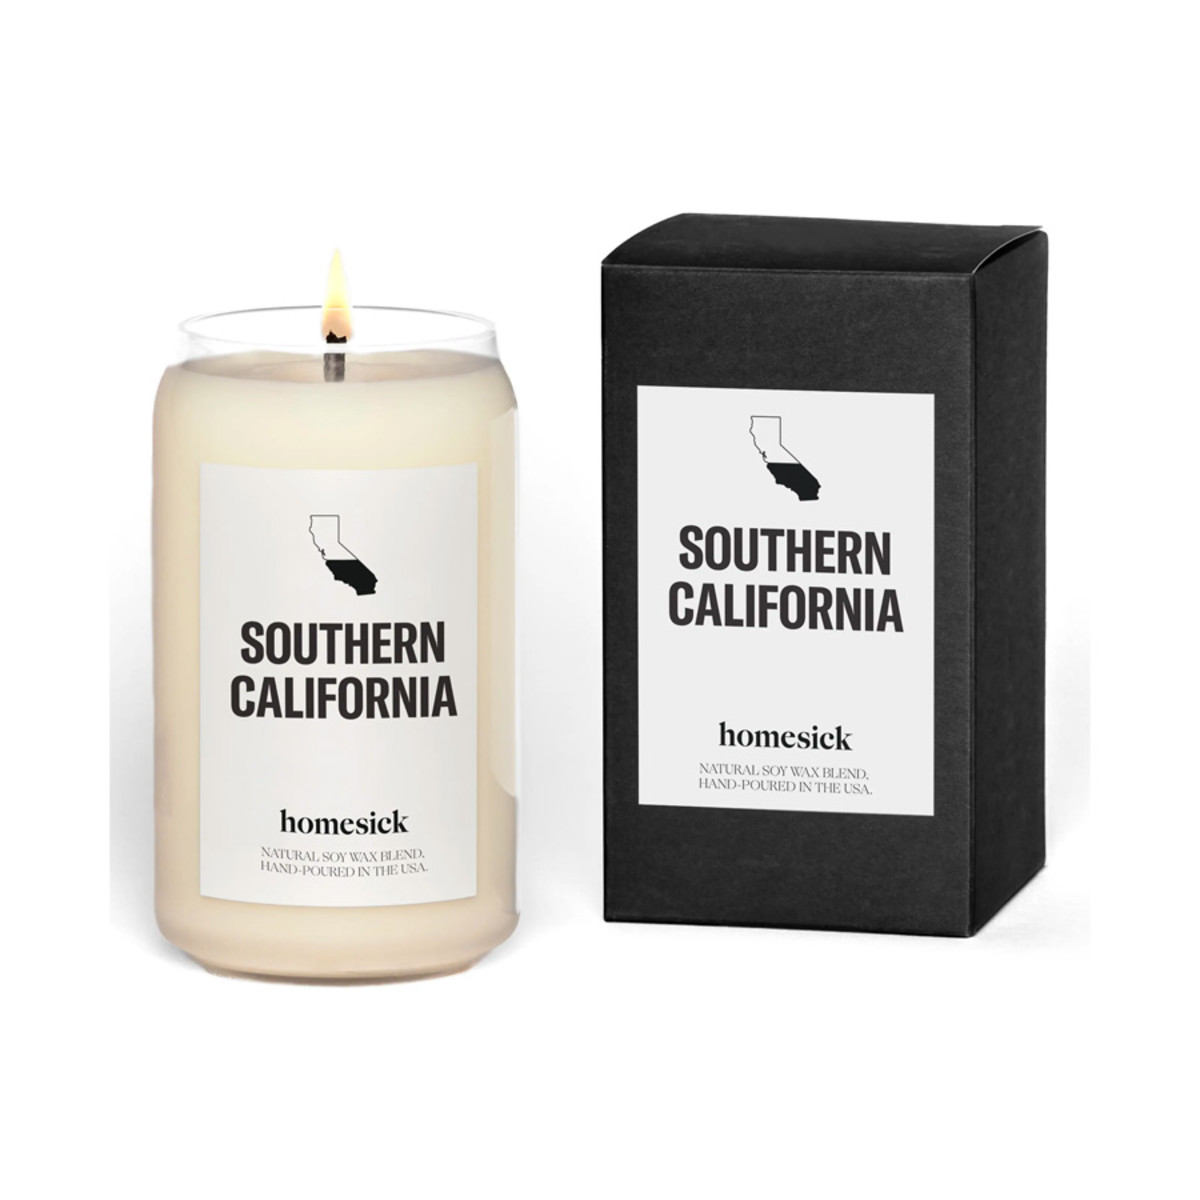 https://www.mensjournal.com/.image/t_share/MjAxODYzNzkzNjI0OTUwMDUw/homesick-candle-southern-california.jpg